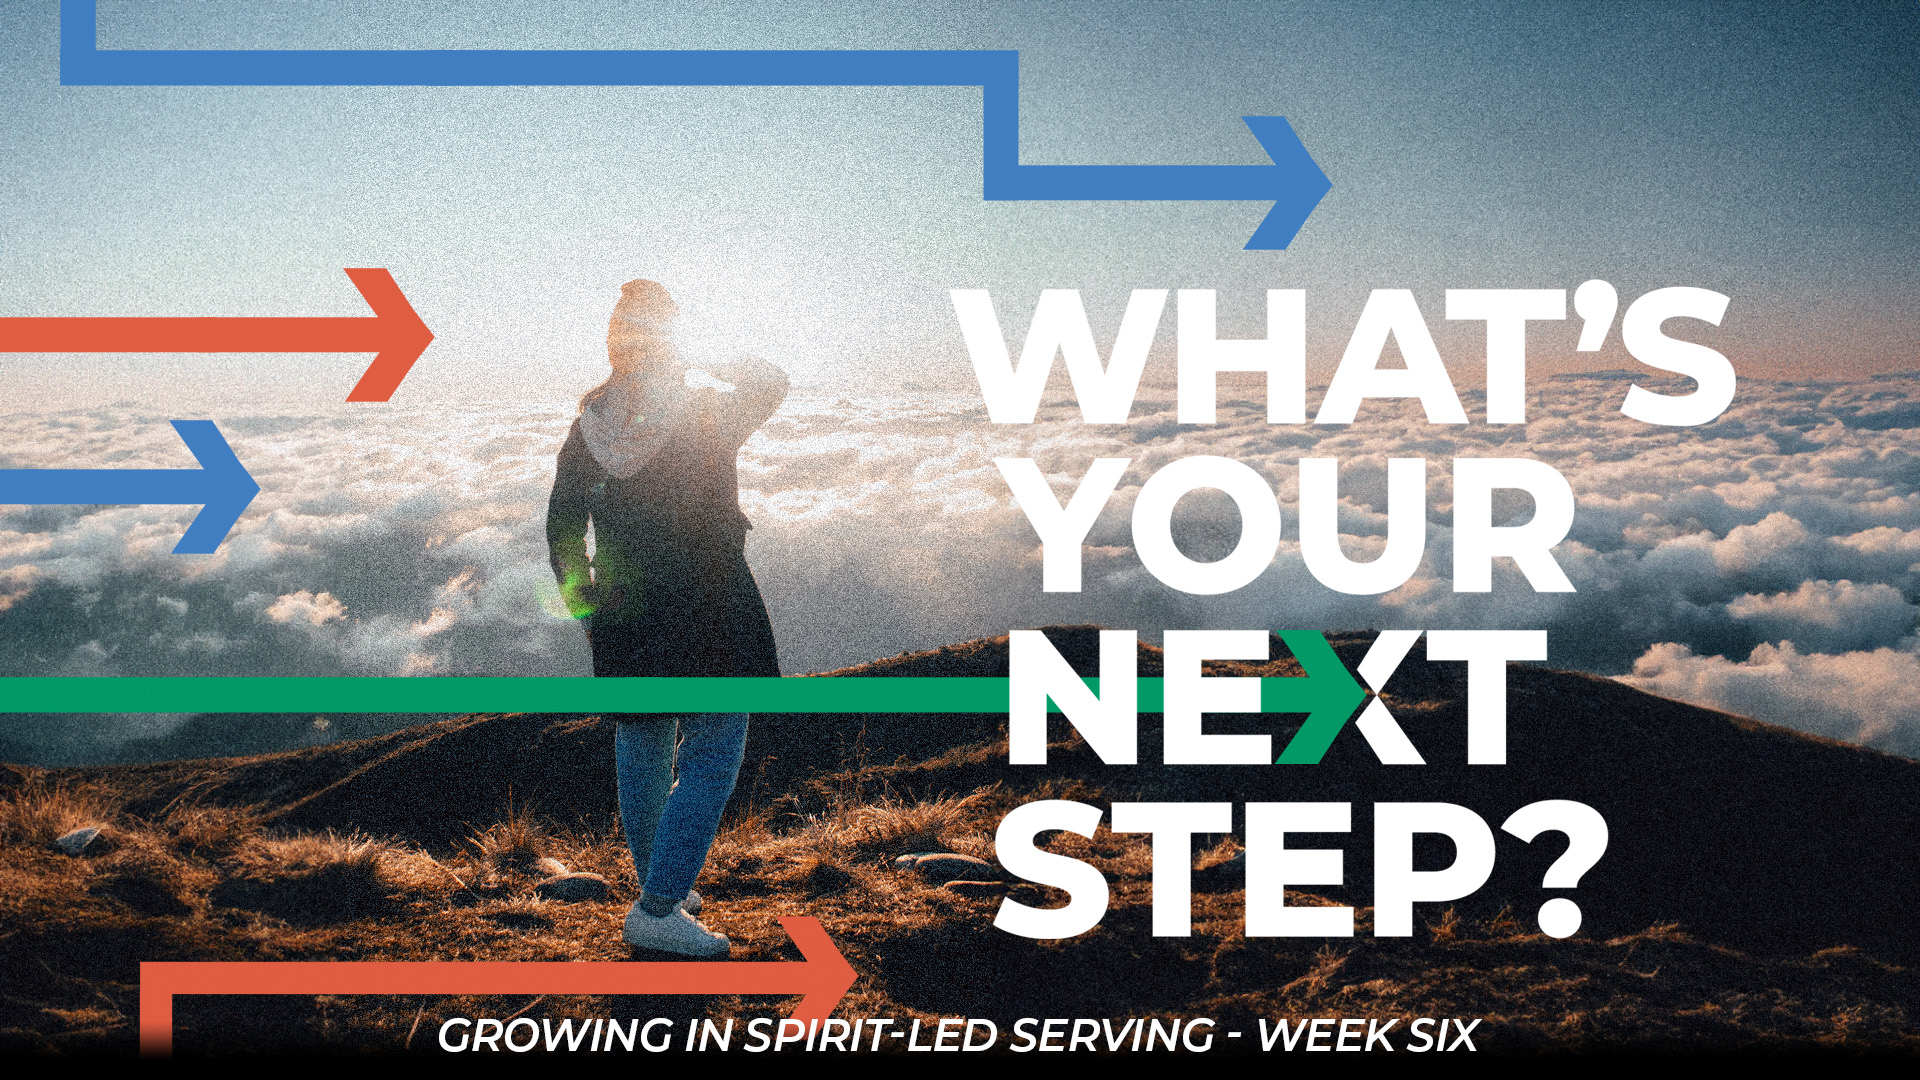 Growing in Spirit-led Serving - Week Six